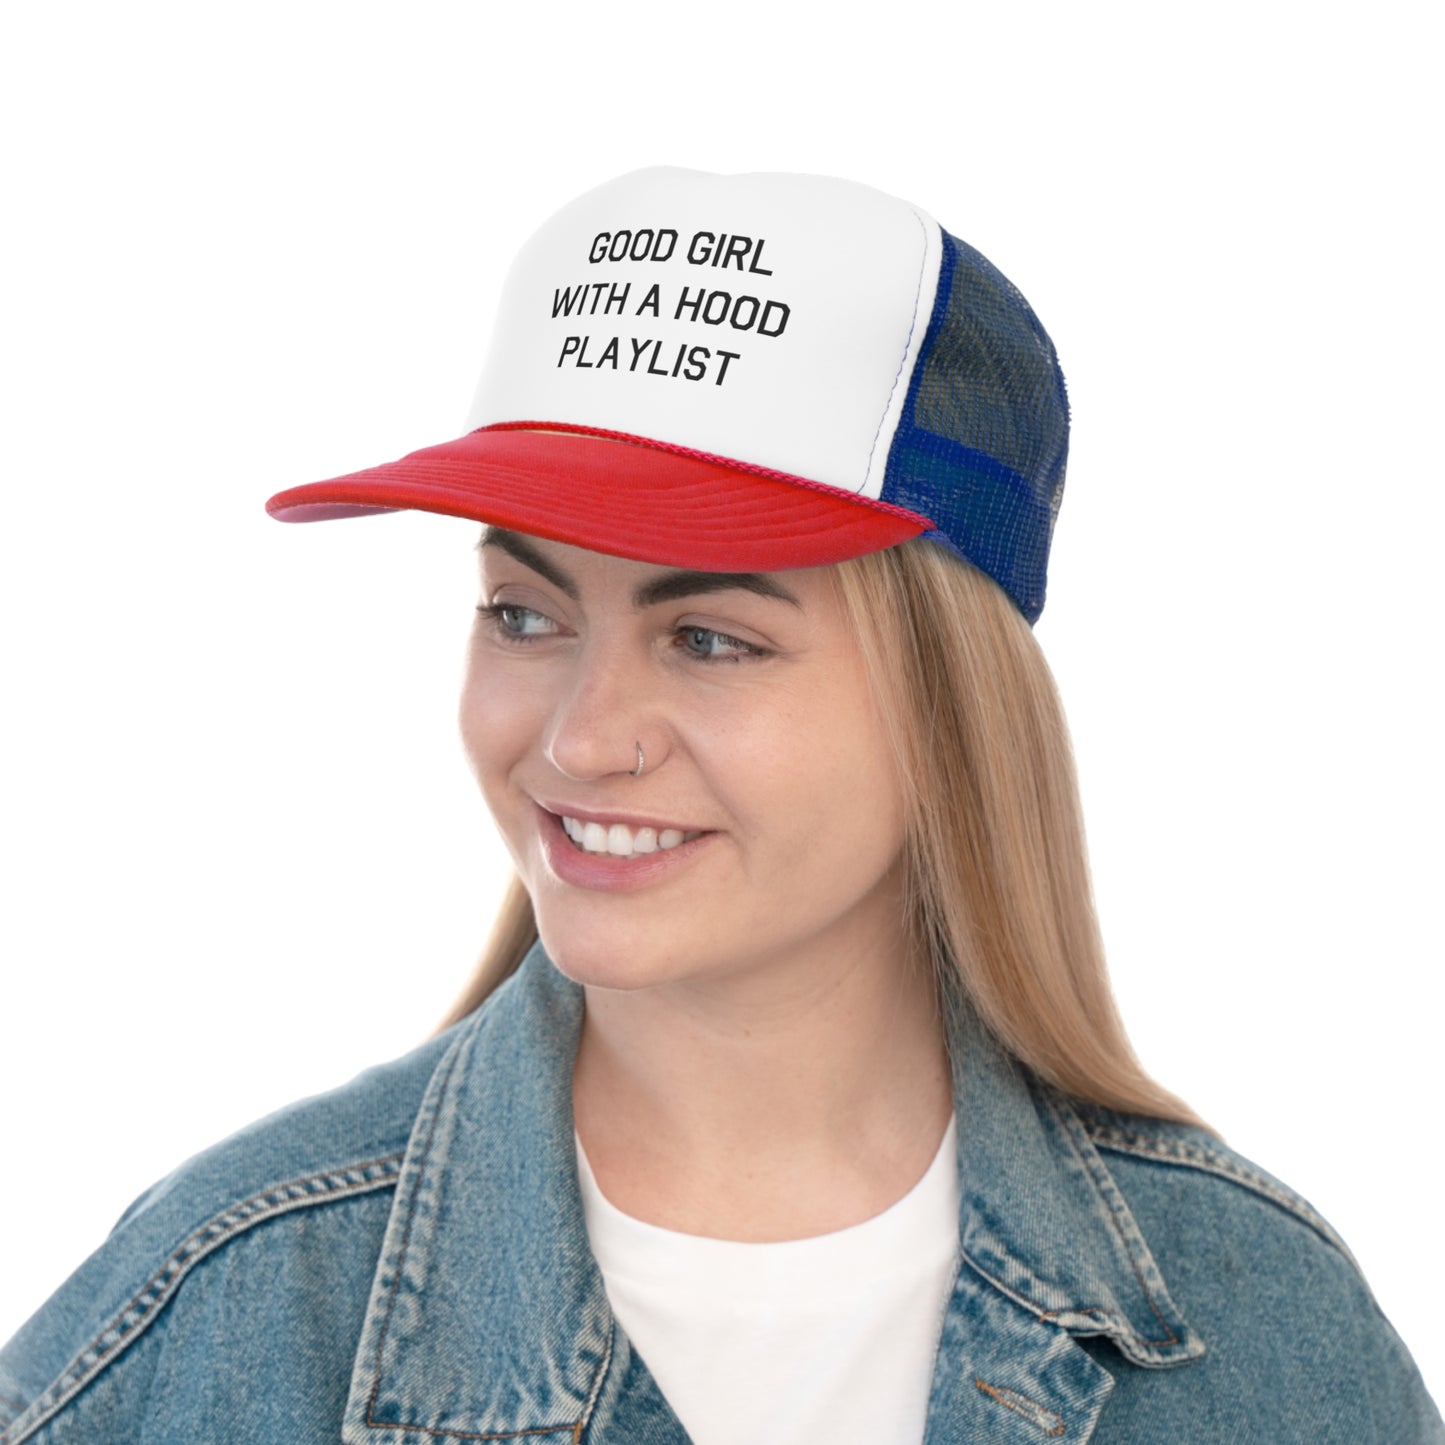 Good Girl With A Hood Playlist Snapback Trucker Hat Great gift for a Good Girl With A Hood Playlist